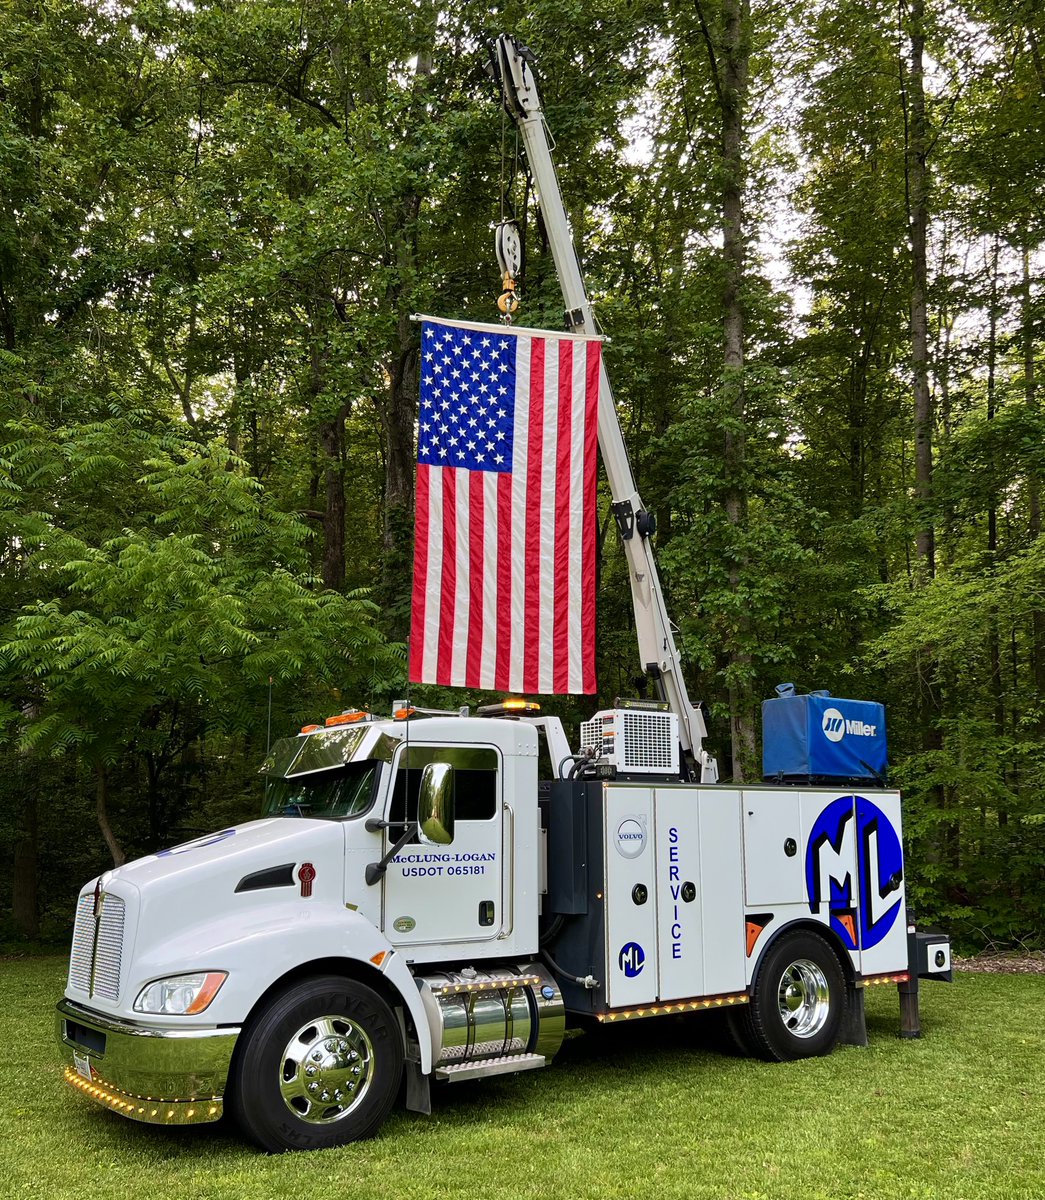 Manassas Field Service Tech, Tyler Matsumoto celebrated Flag Day the McClung-Logan way!